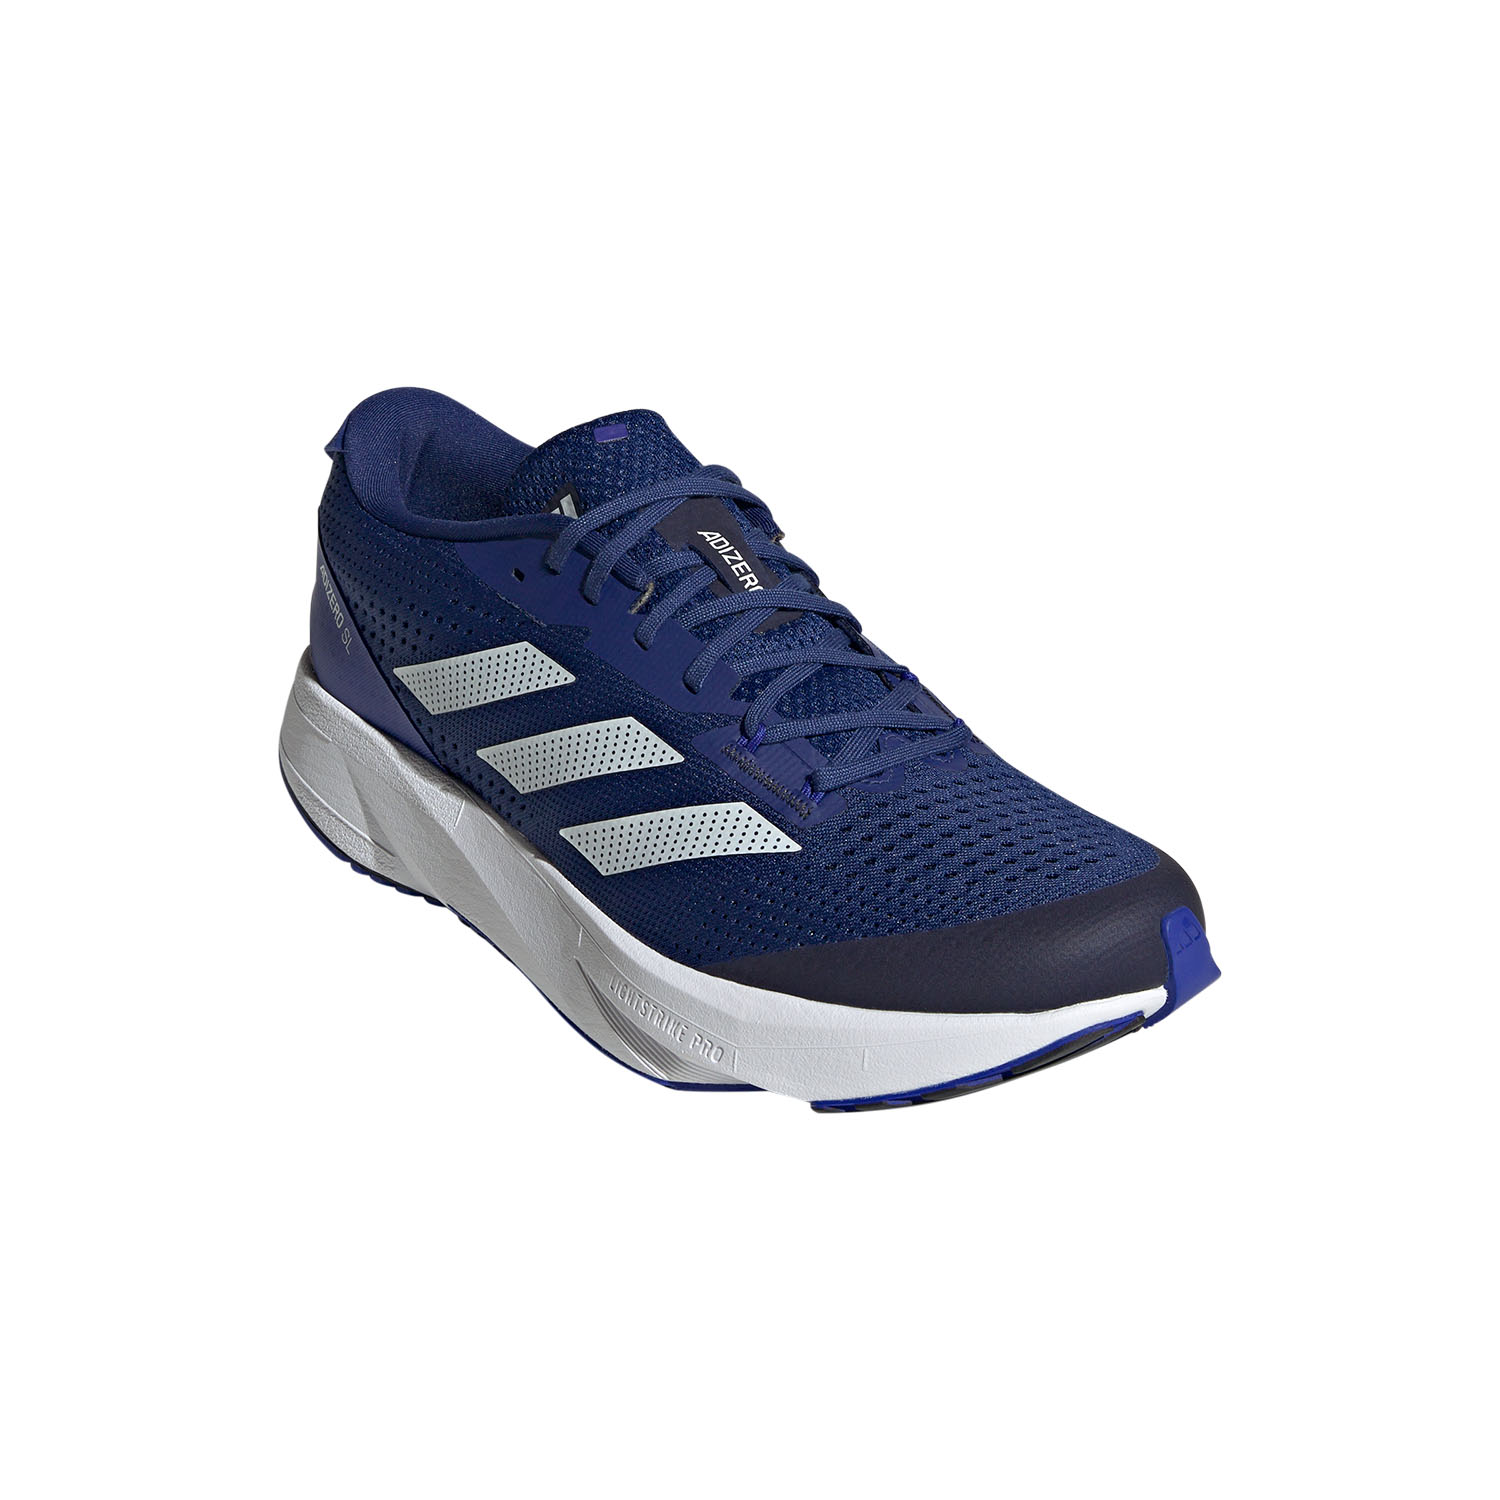 adidas adizero SL Men's Running Shoes - Victory Blue/Cloud White